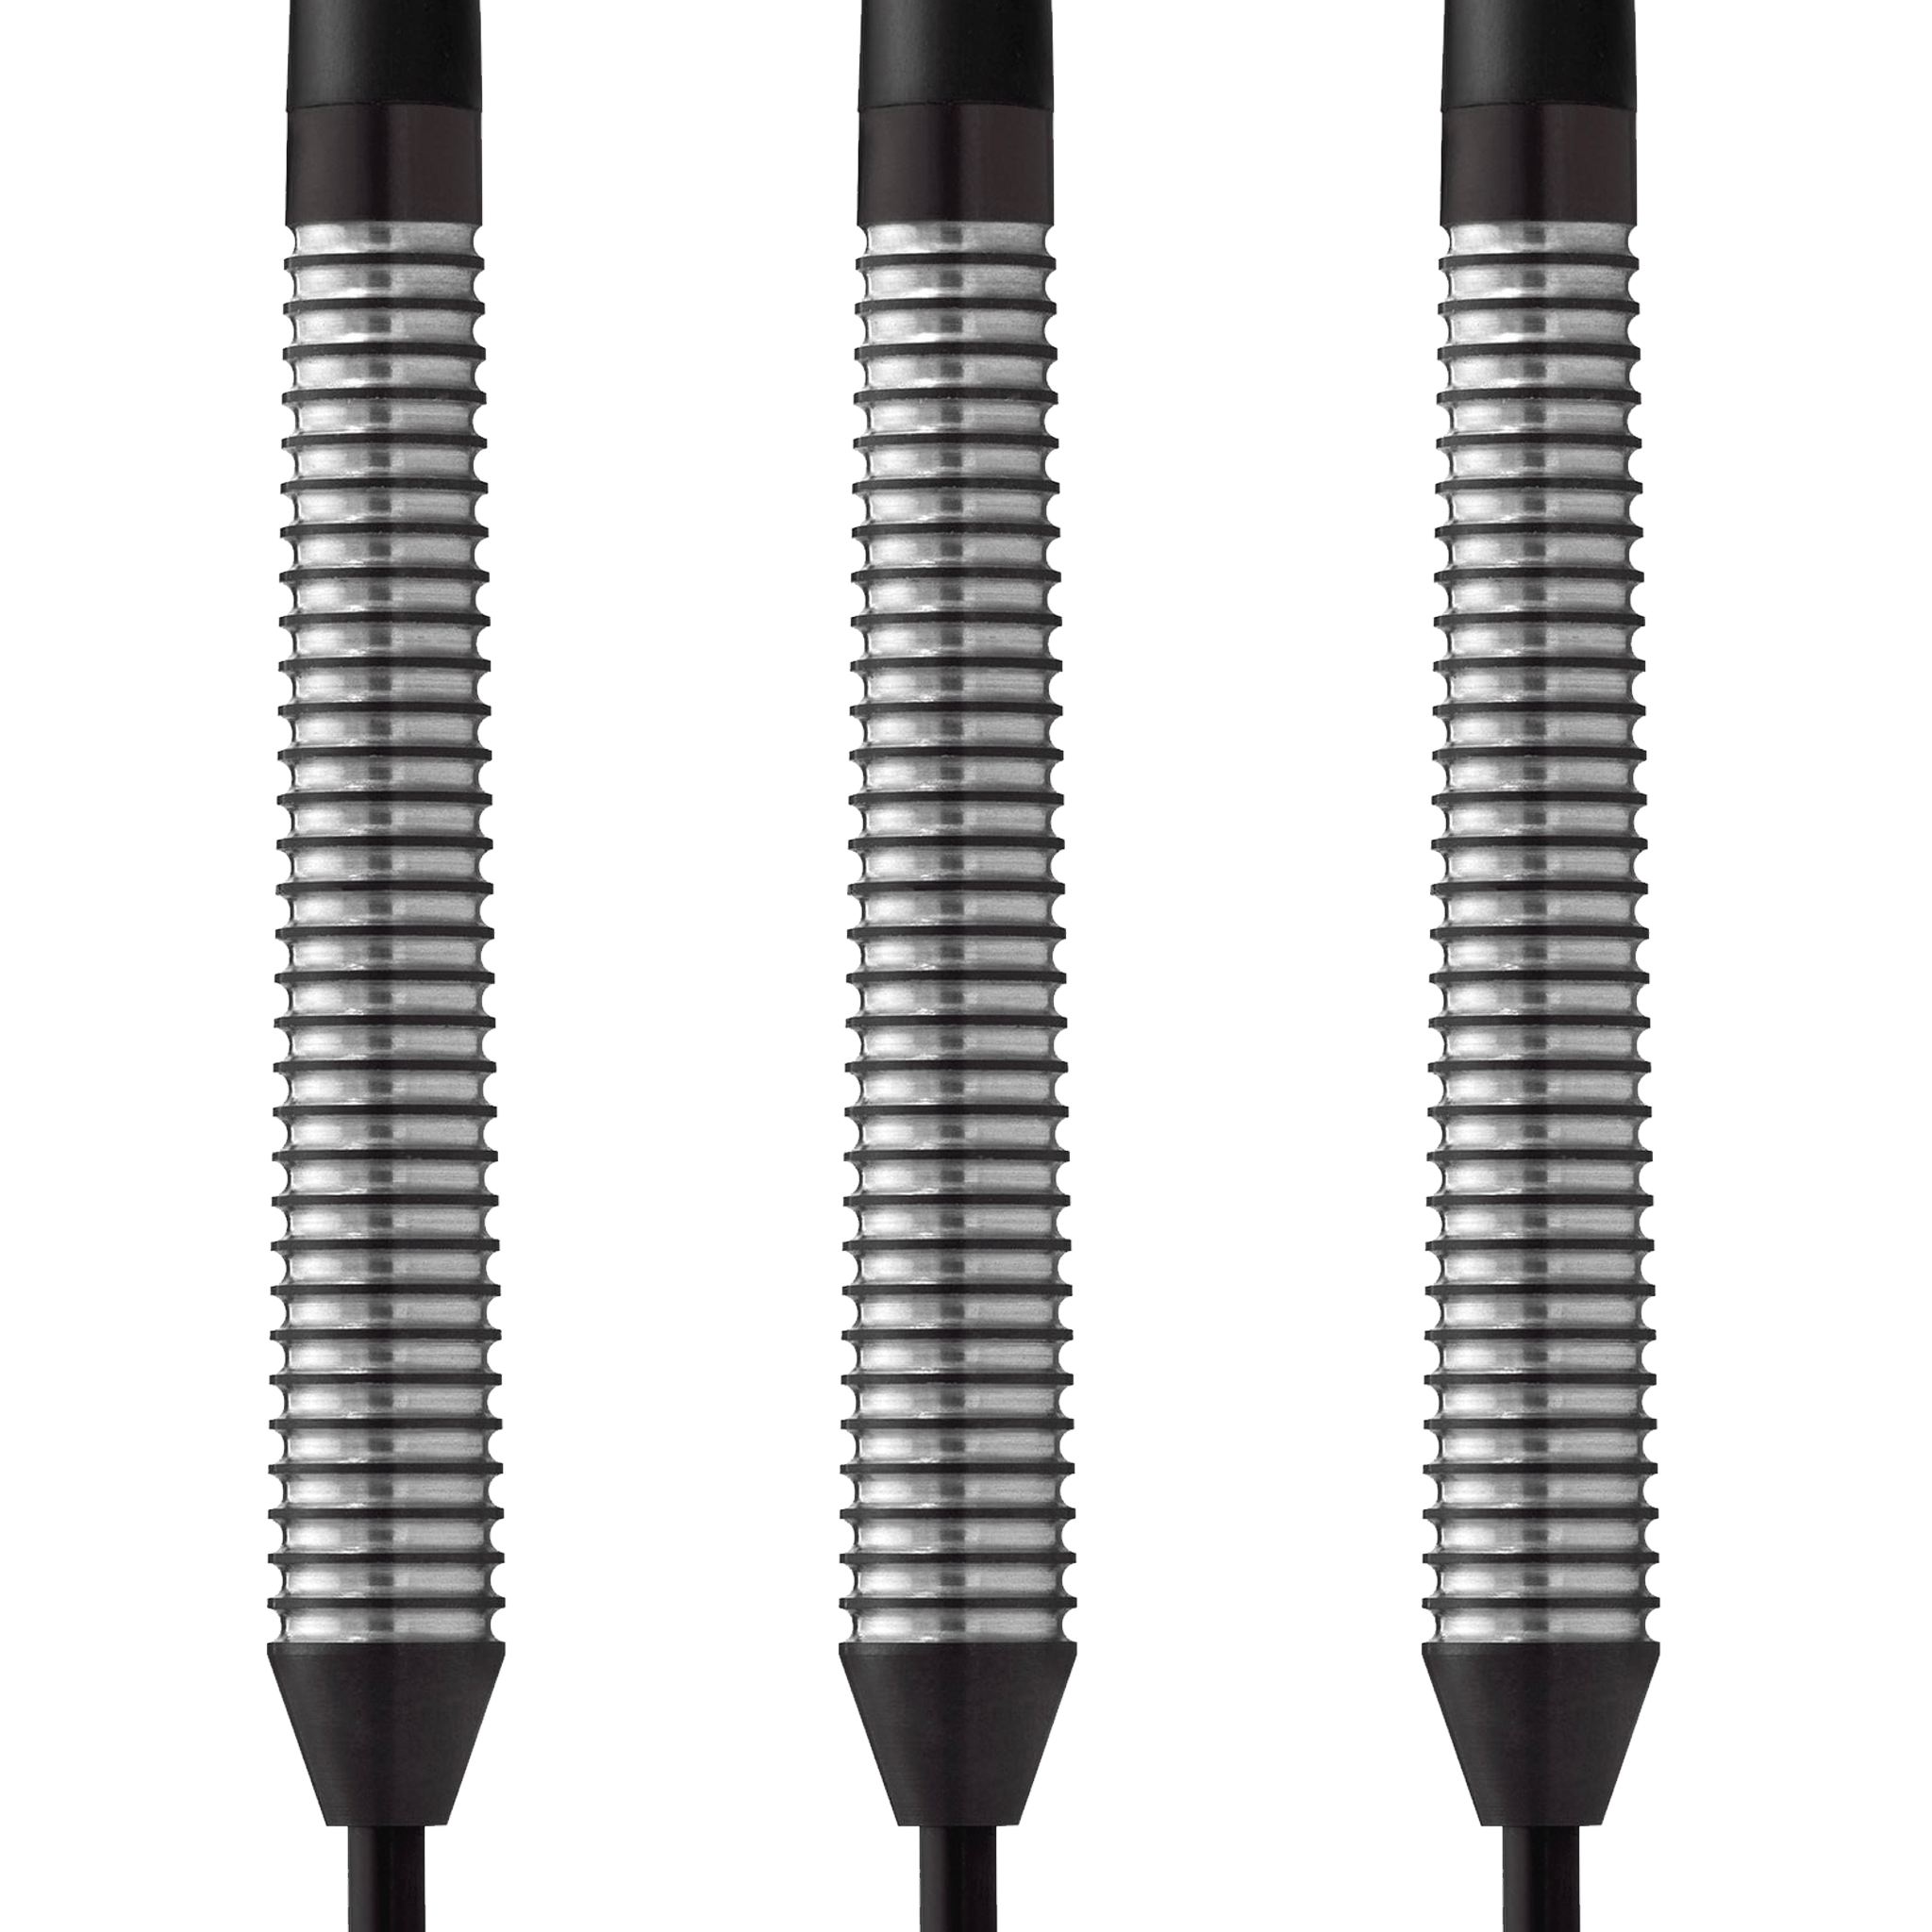 Designa Black Shadow V2 M4 Steel Tip Darts - 90% Tungsten - 22 Grams Darts